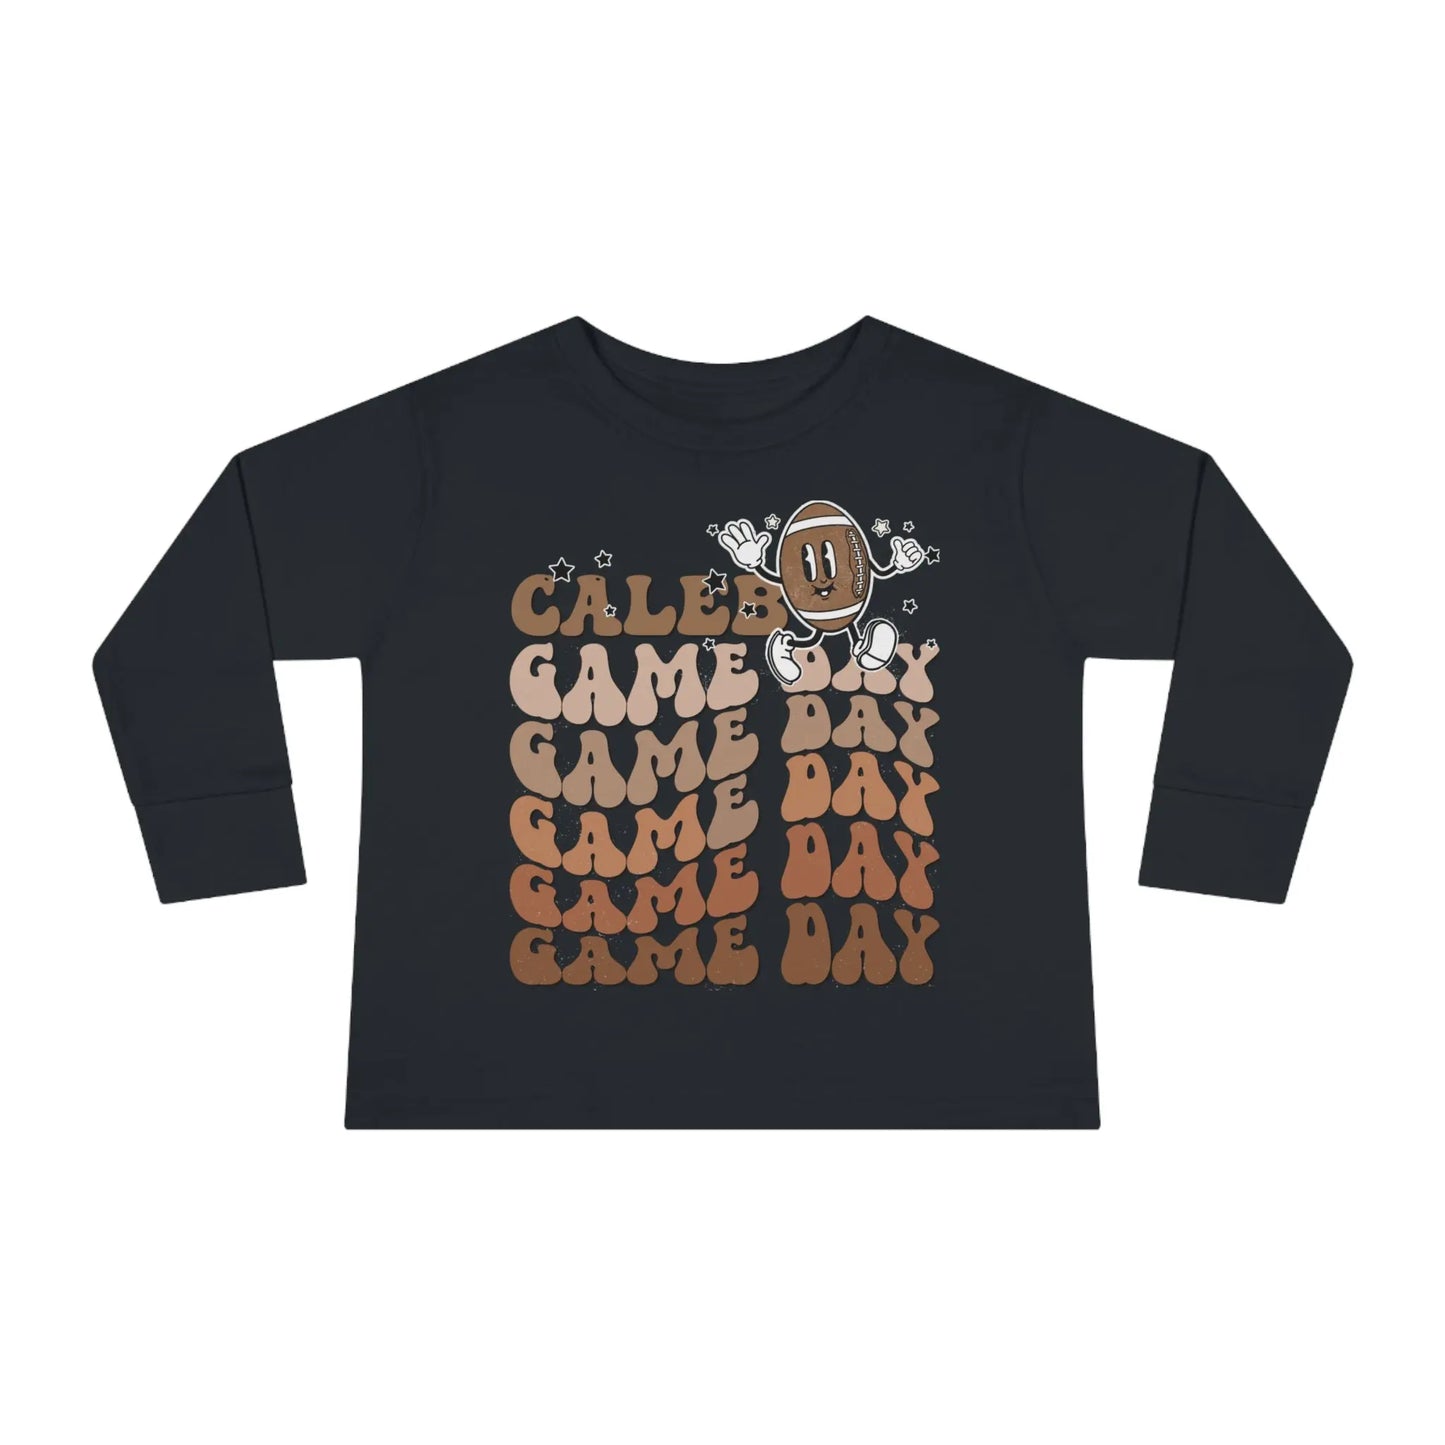 Football Game Day Toddler Long Sleeve Tshirt - Amazing Faith Designs